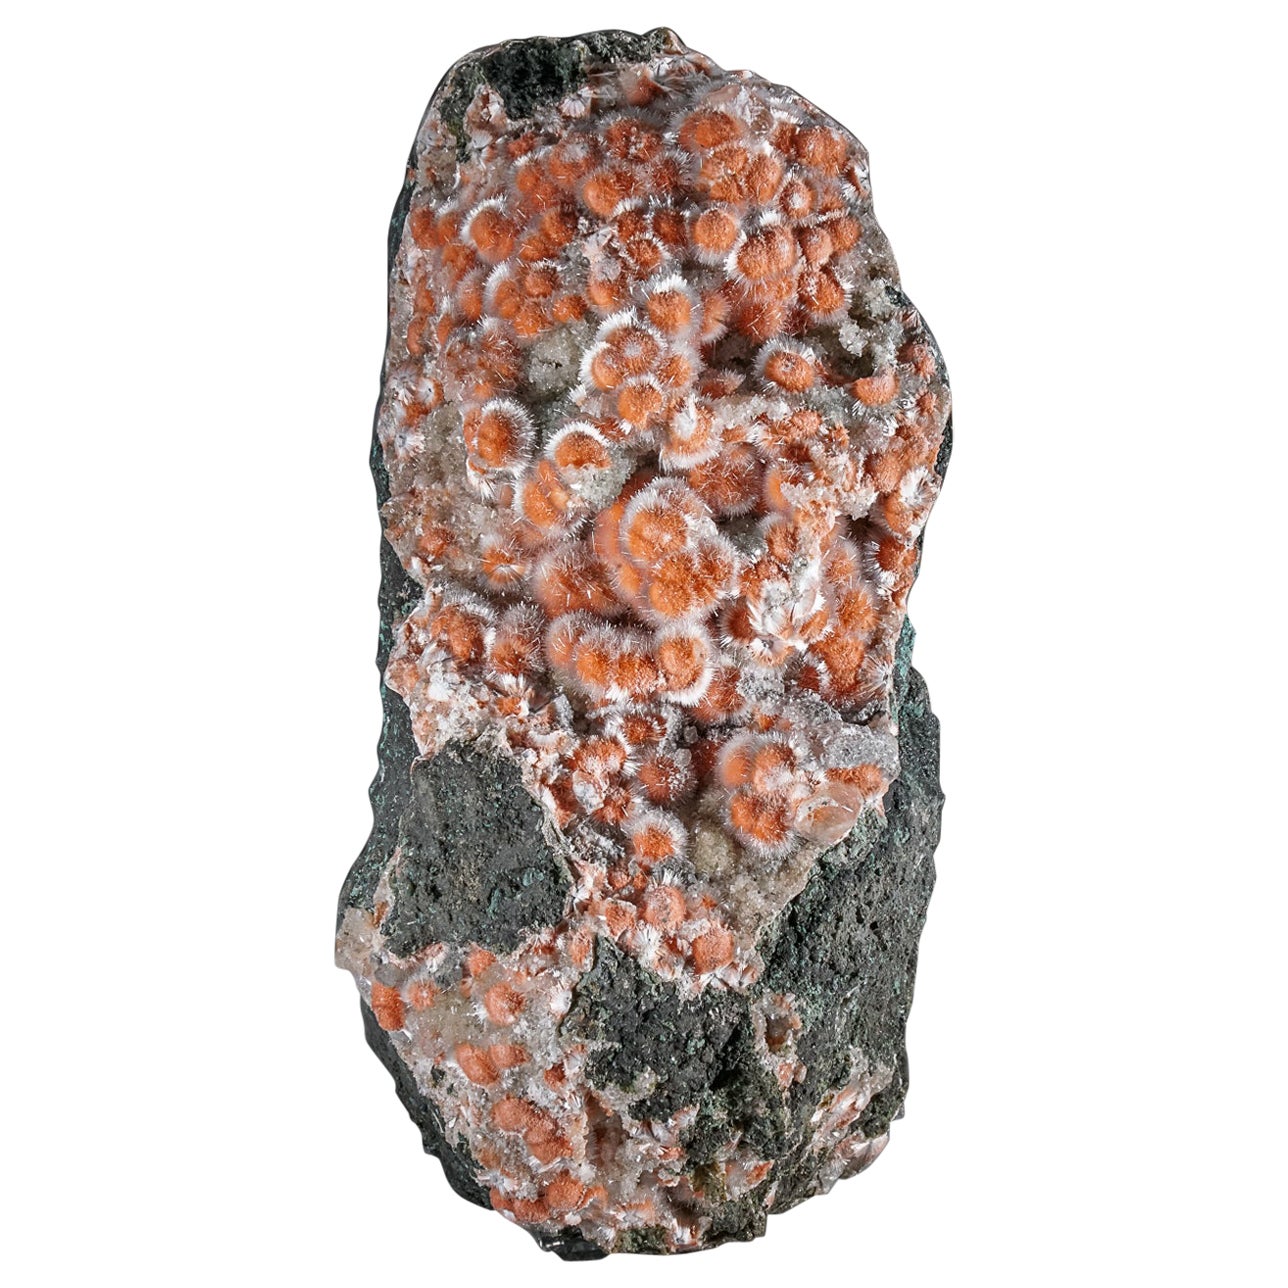 Thomsonite with Mesolite from Soygaon, Aurangabad District, Maharashtra, India